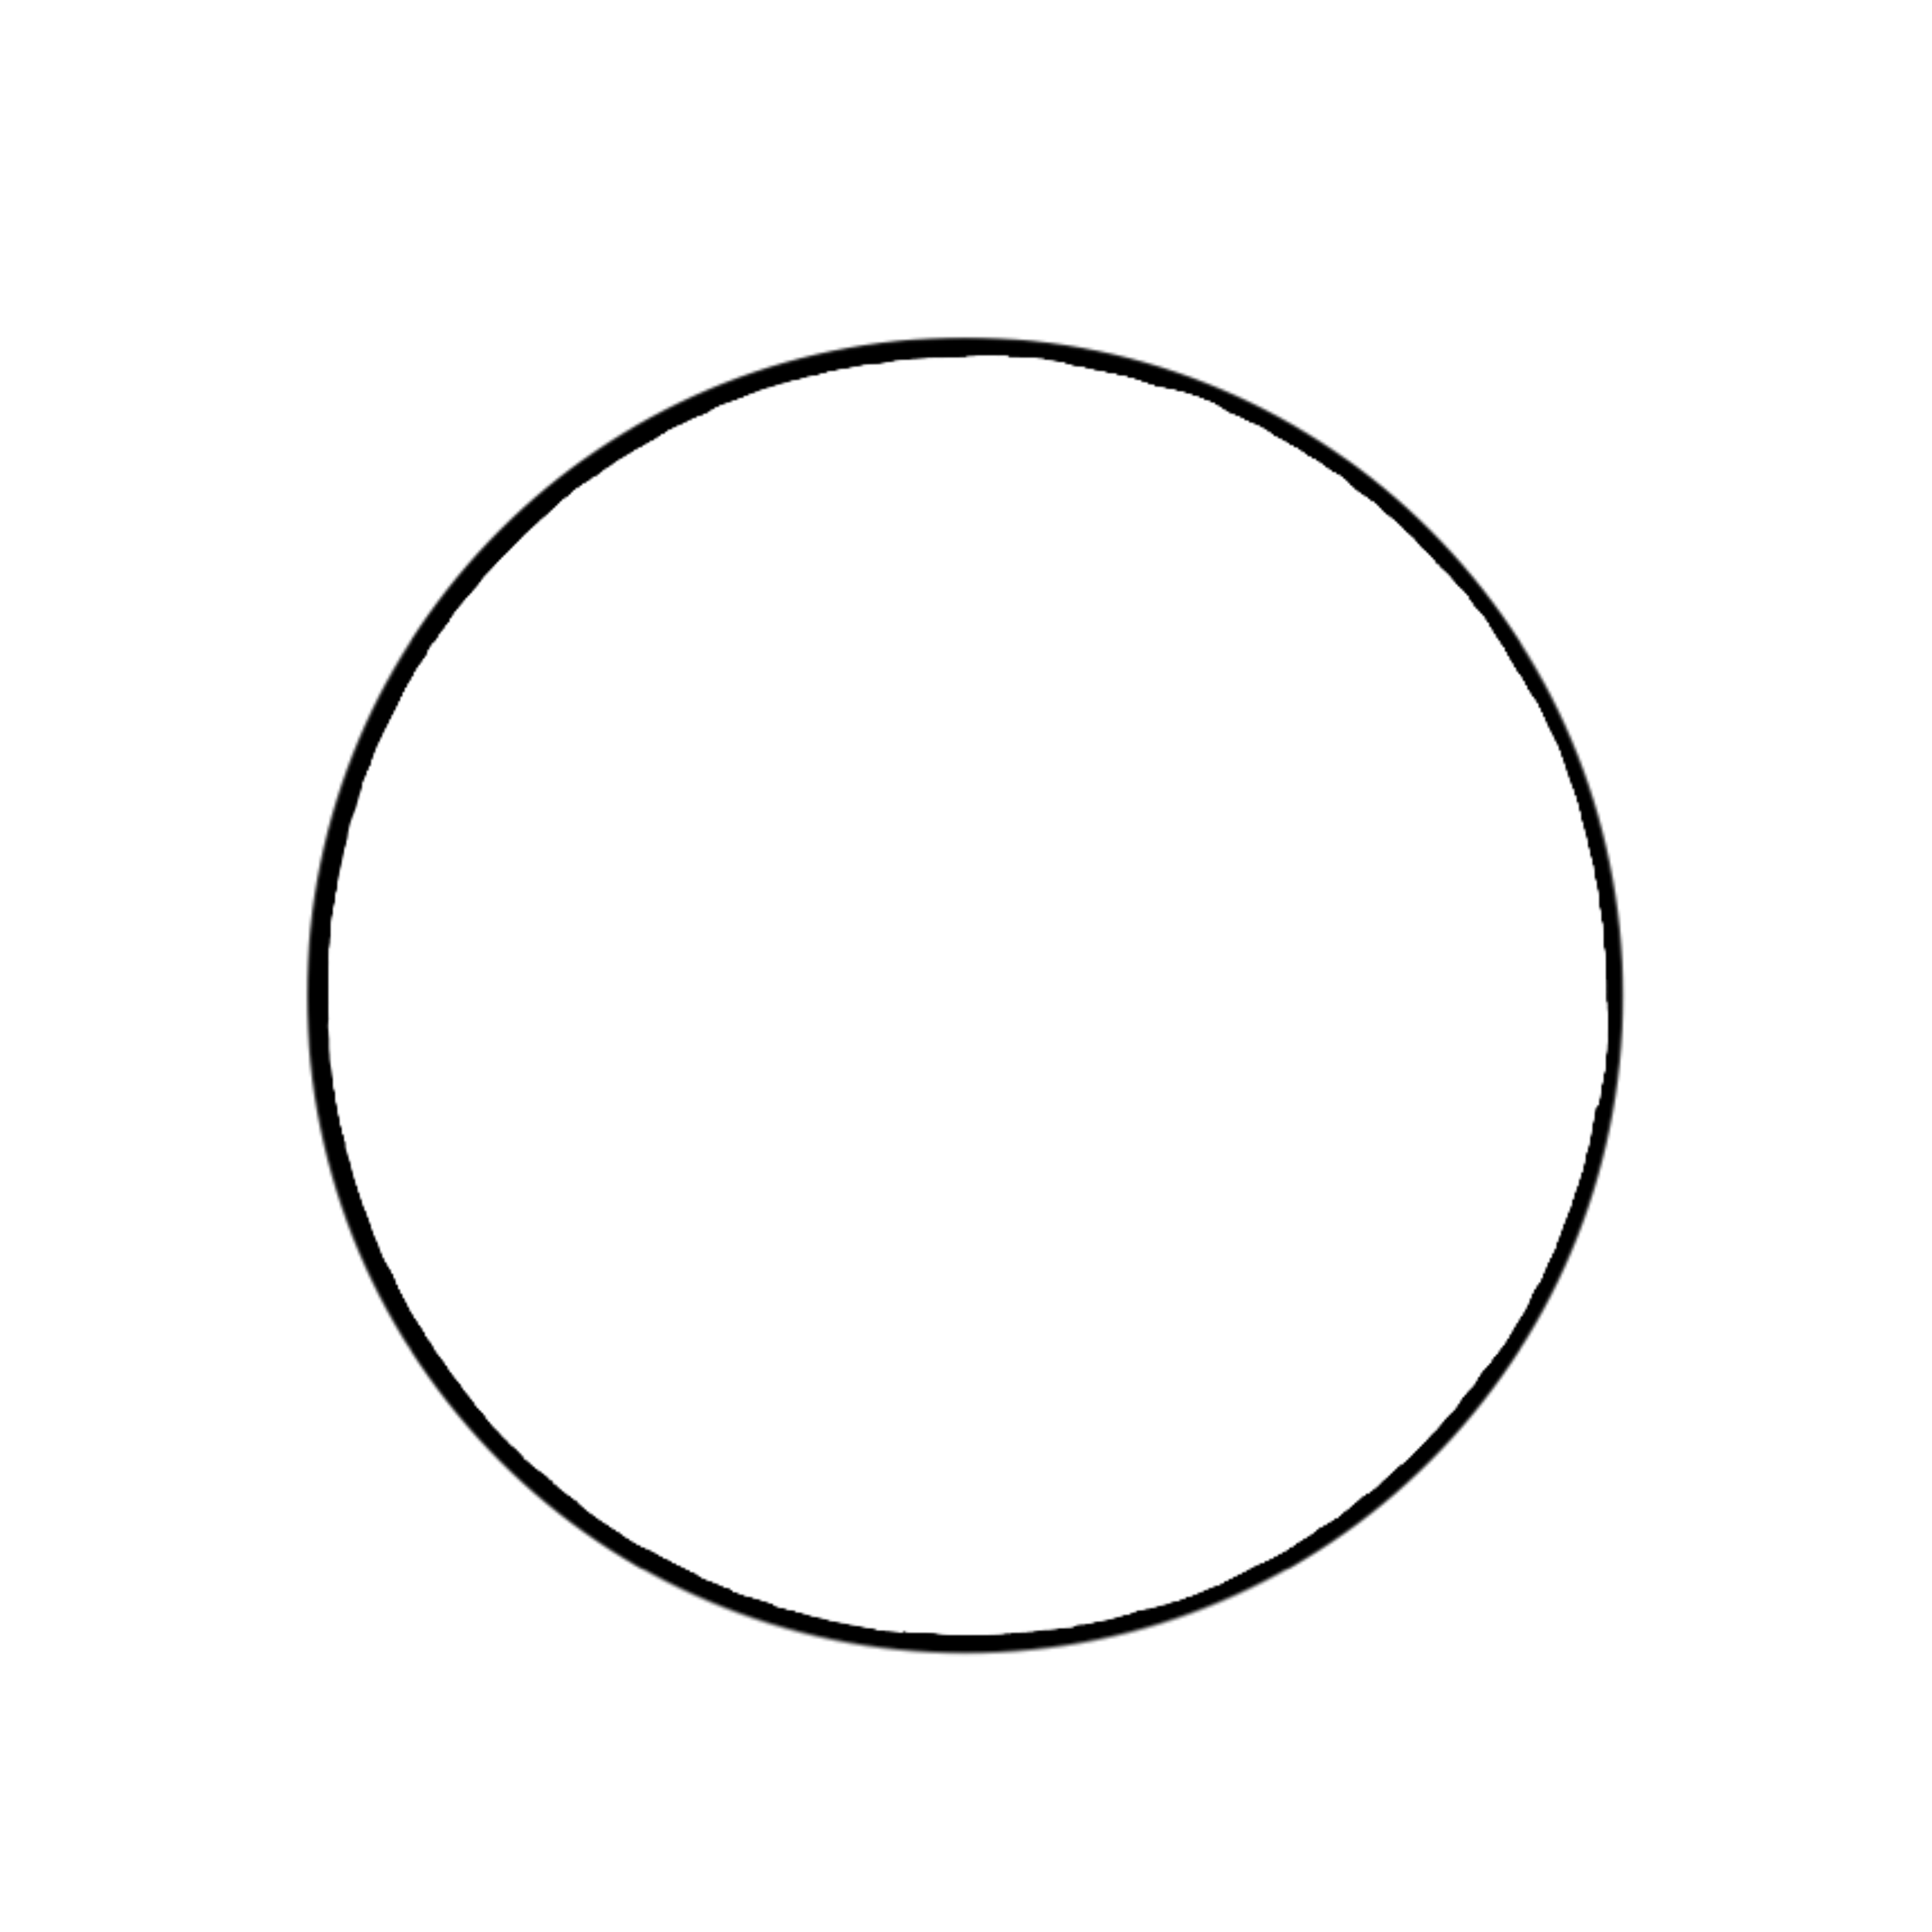 Картинка круга